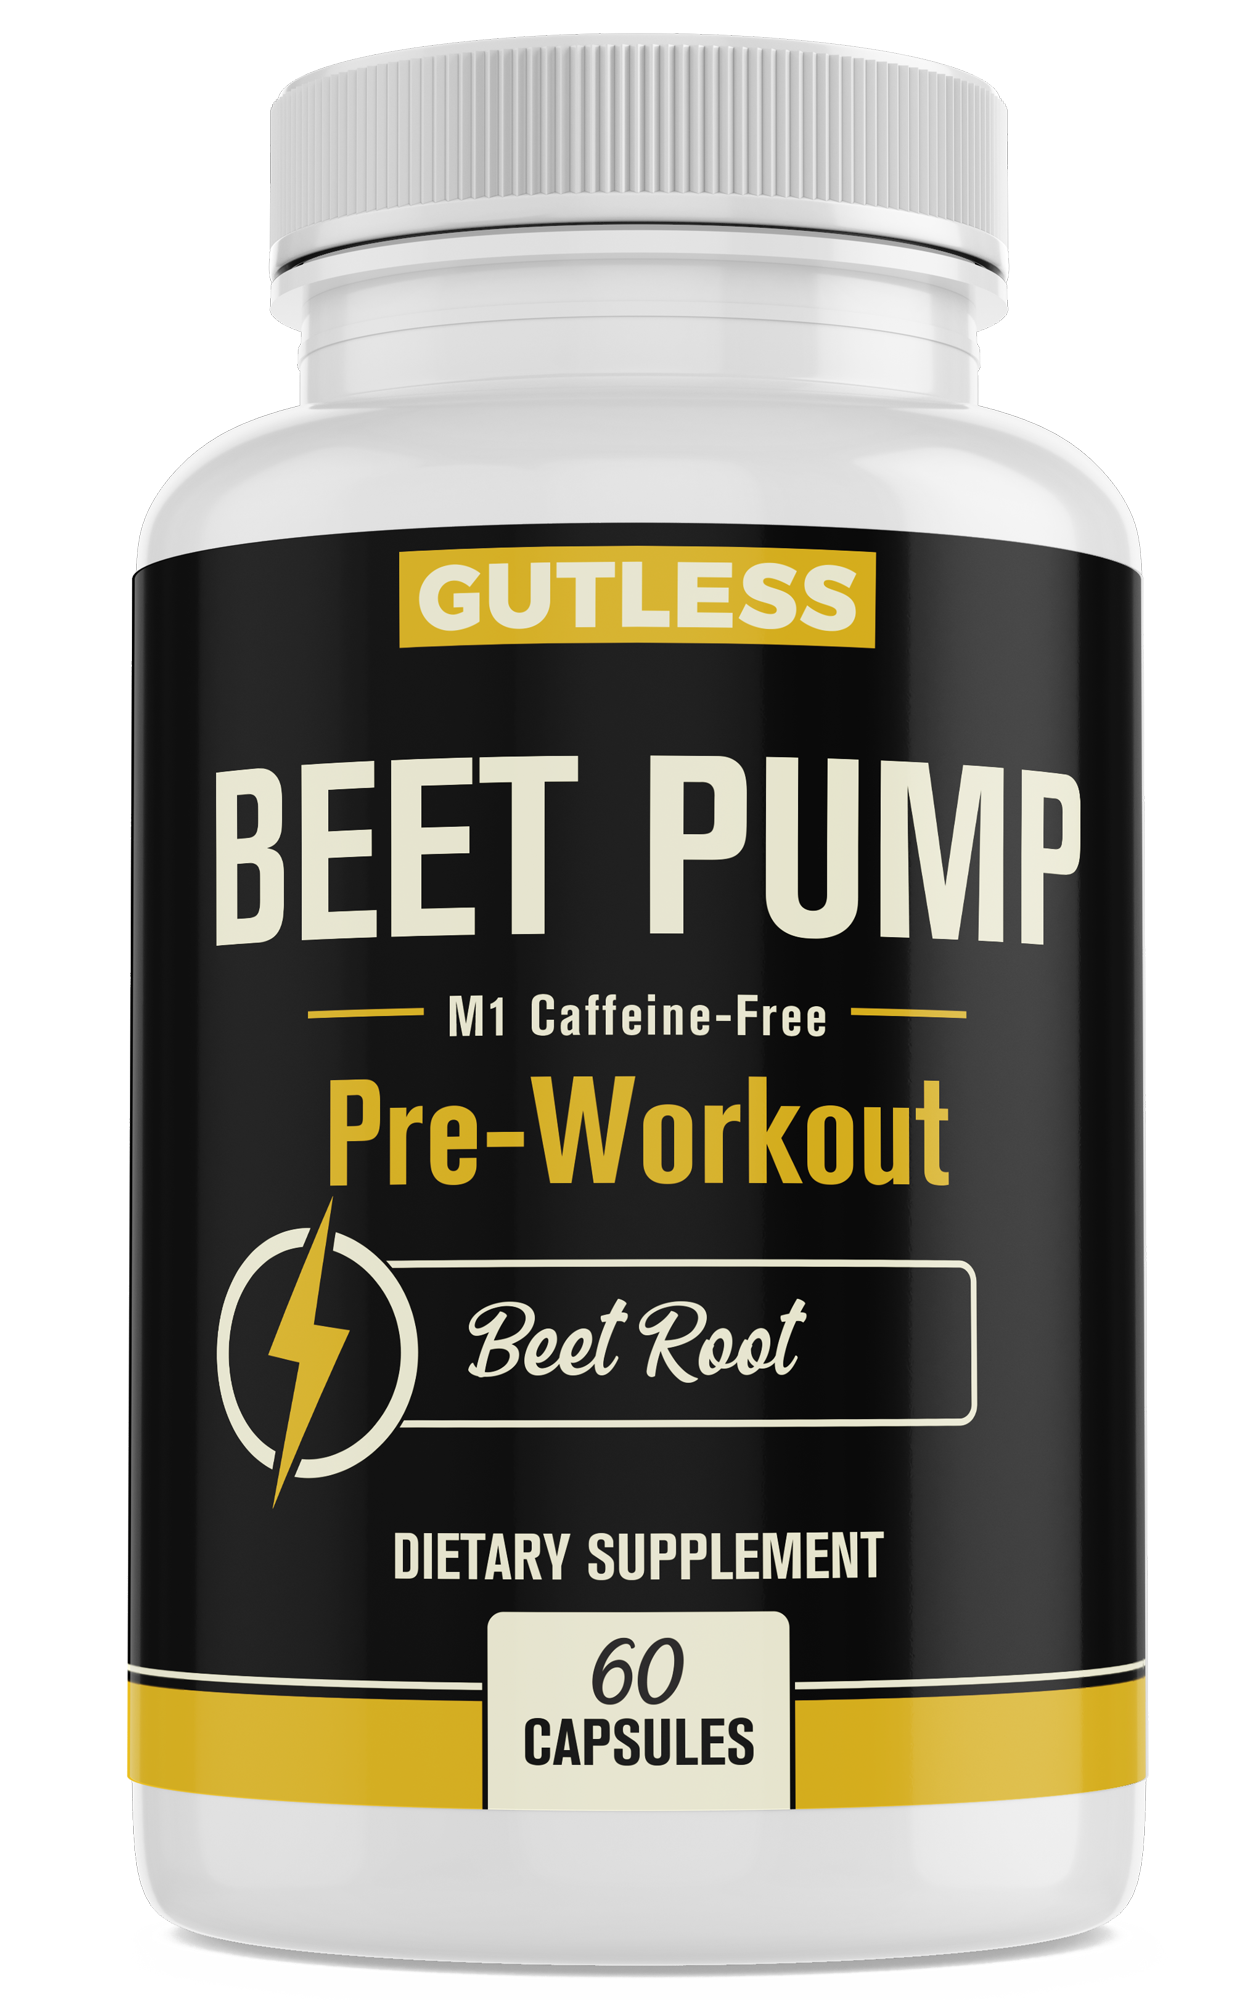 BEET PUMP (Pre-Workout No Caffeine)